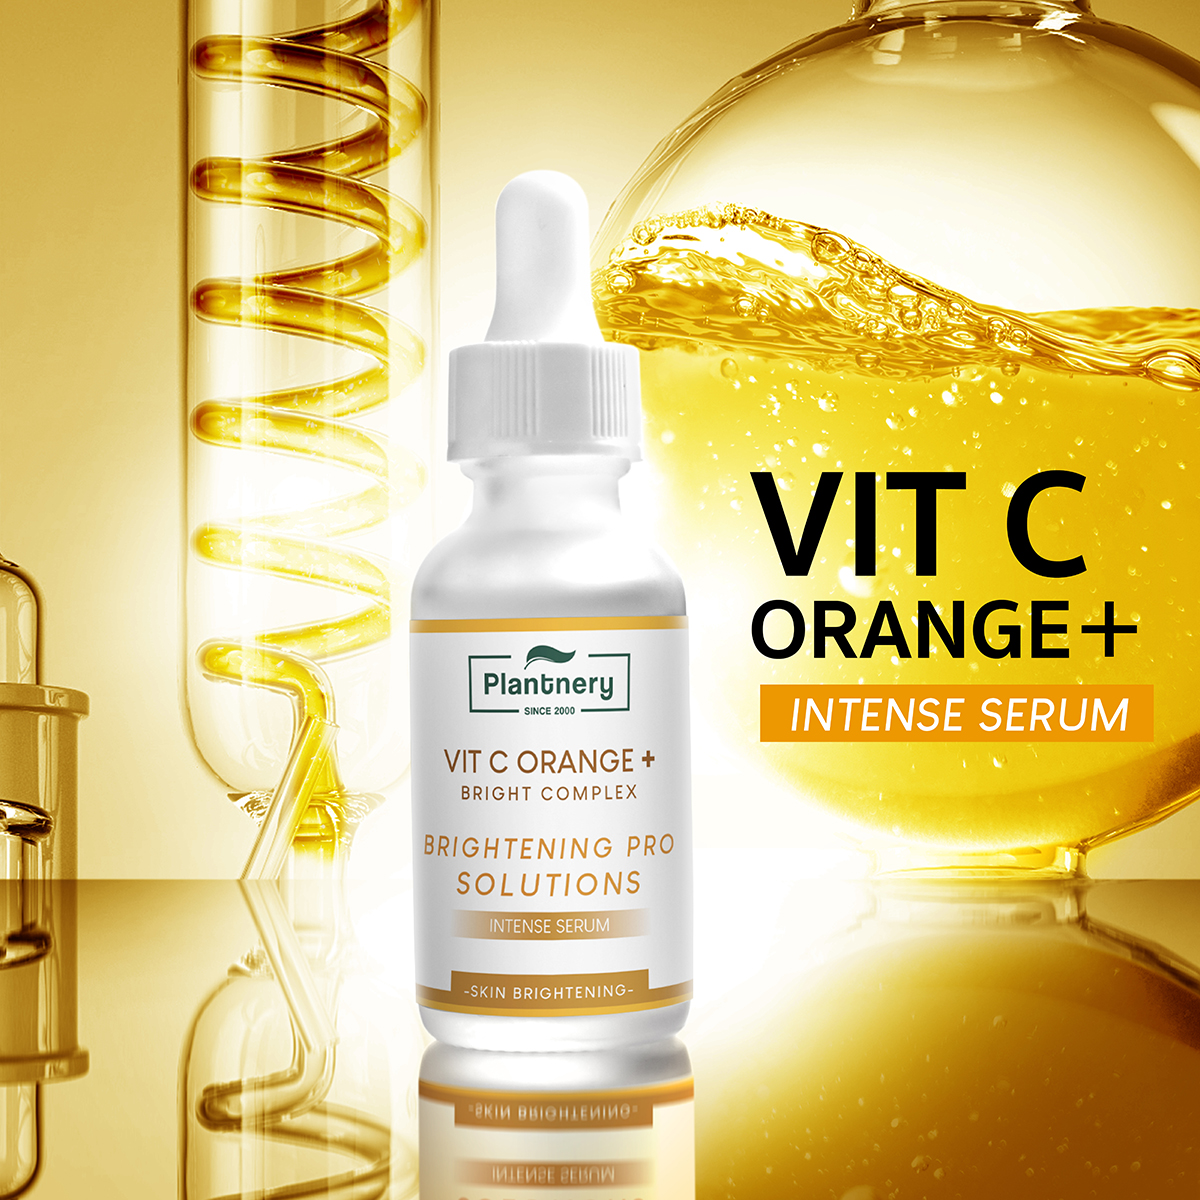 Plantnery Vit C Orange Intense Serum 1 2